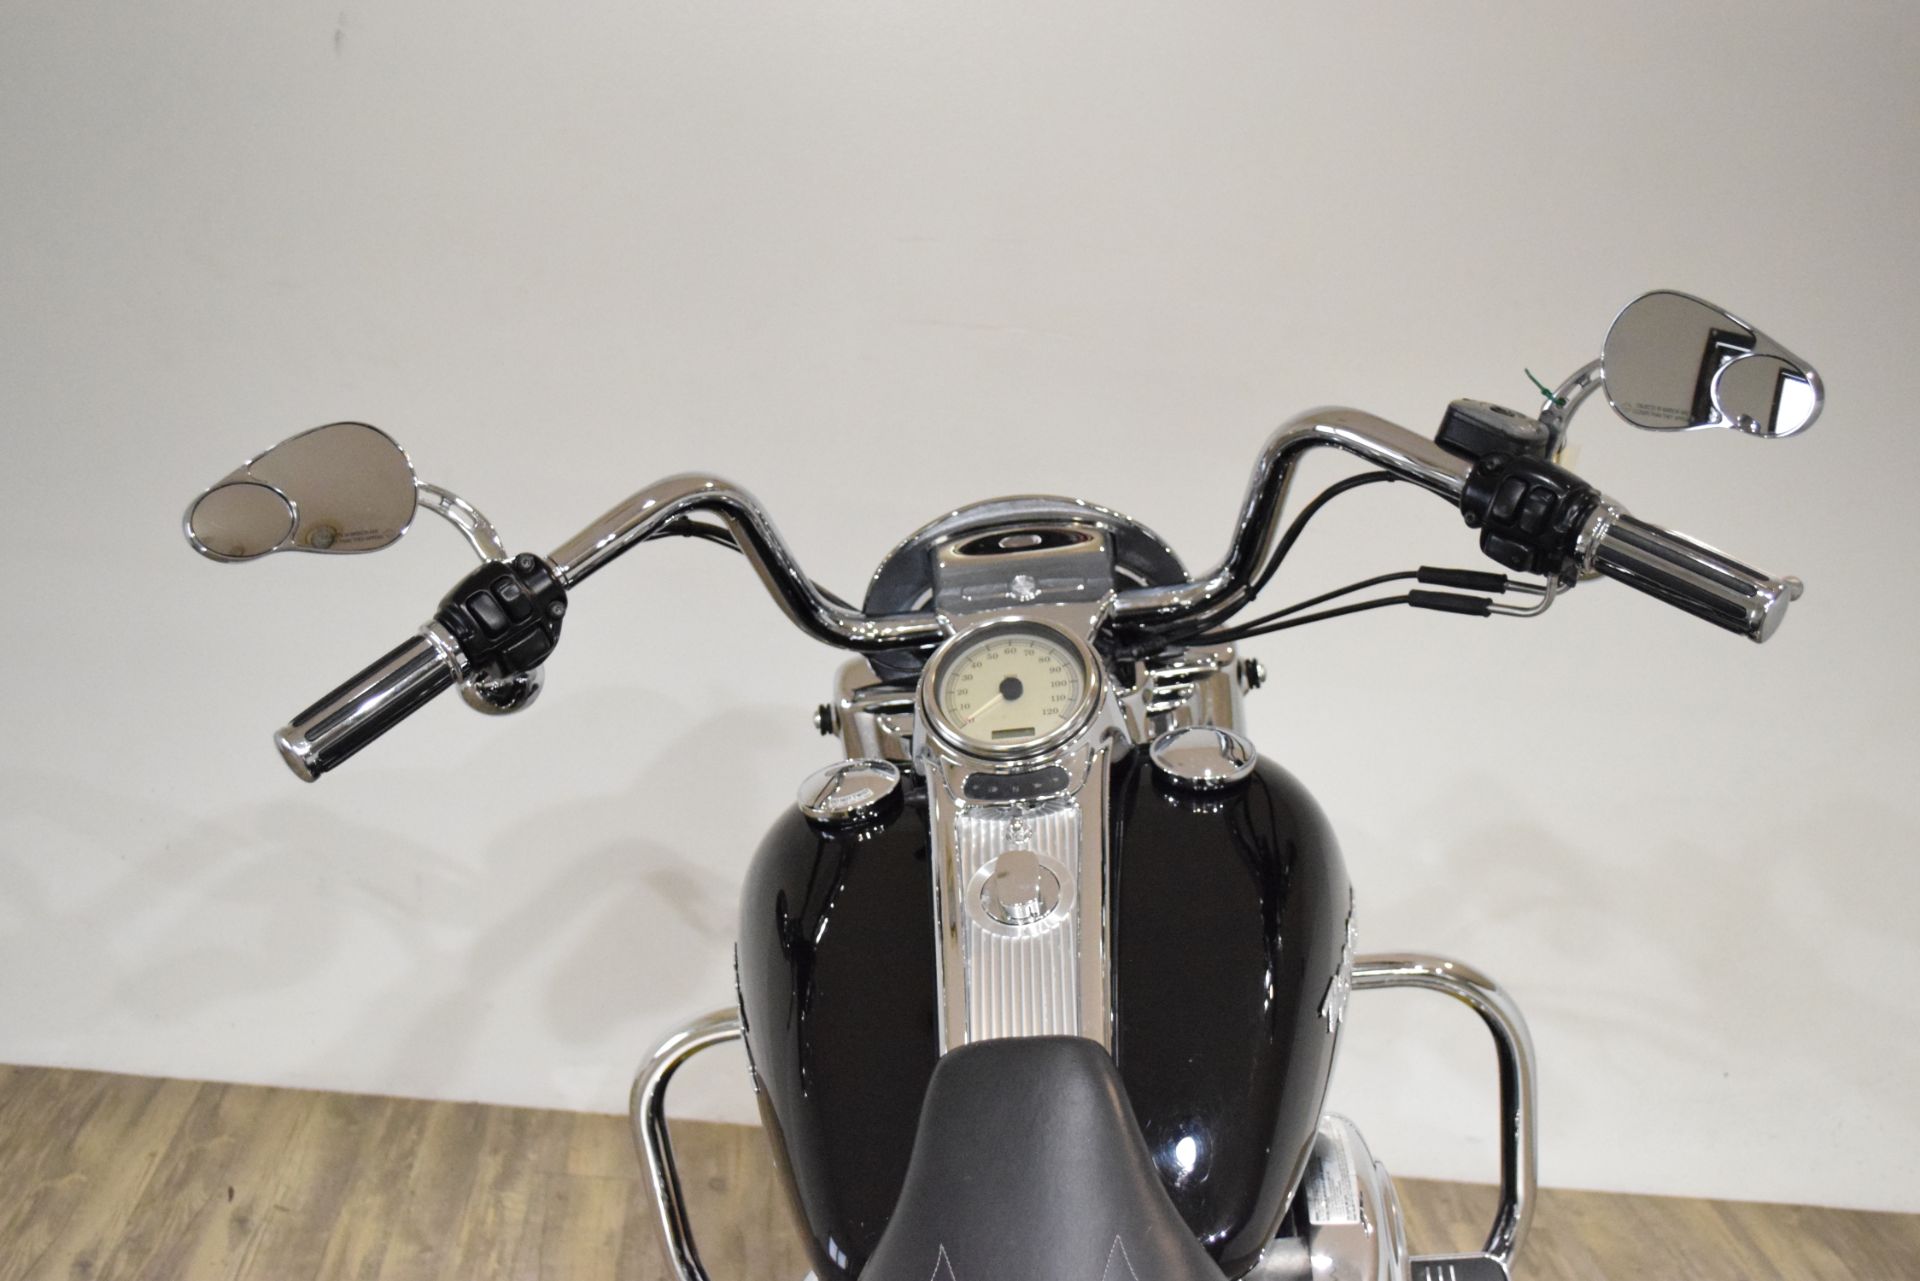 2006 Harley-Davidson Road King® Custom in Wauconda, Illinois - Photo 27